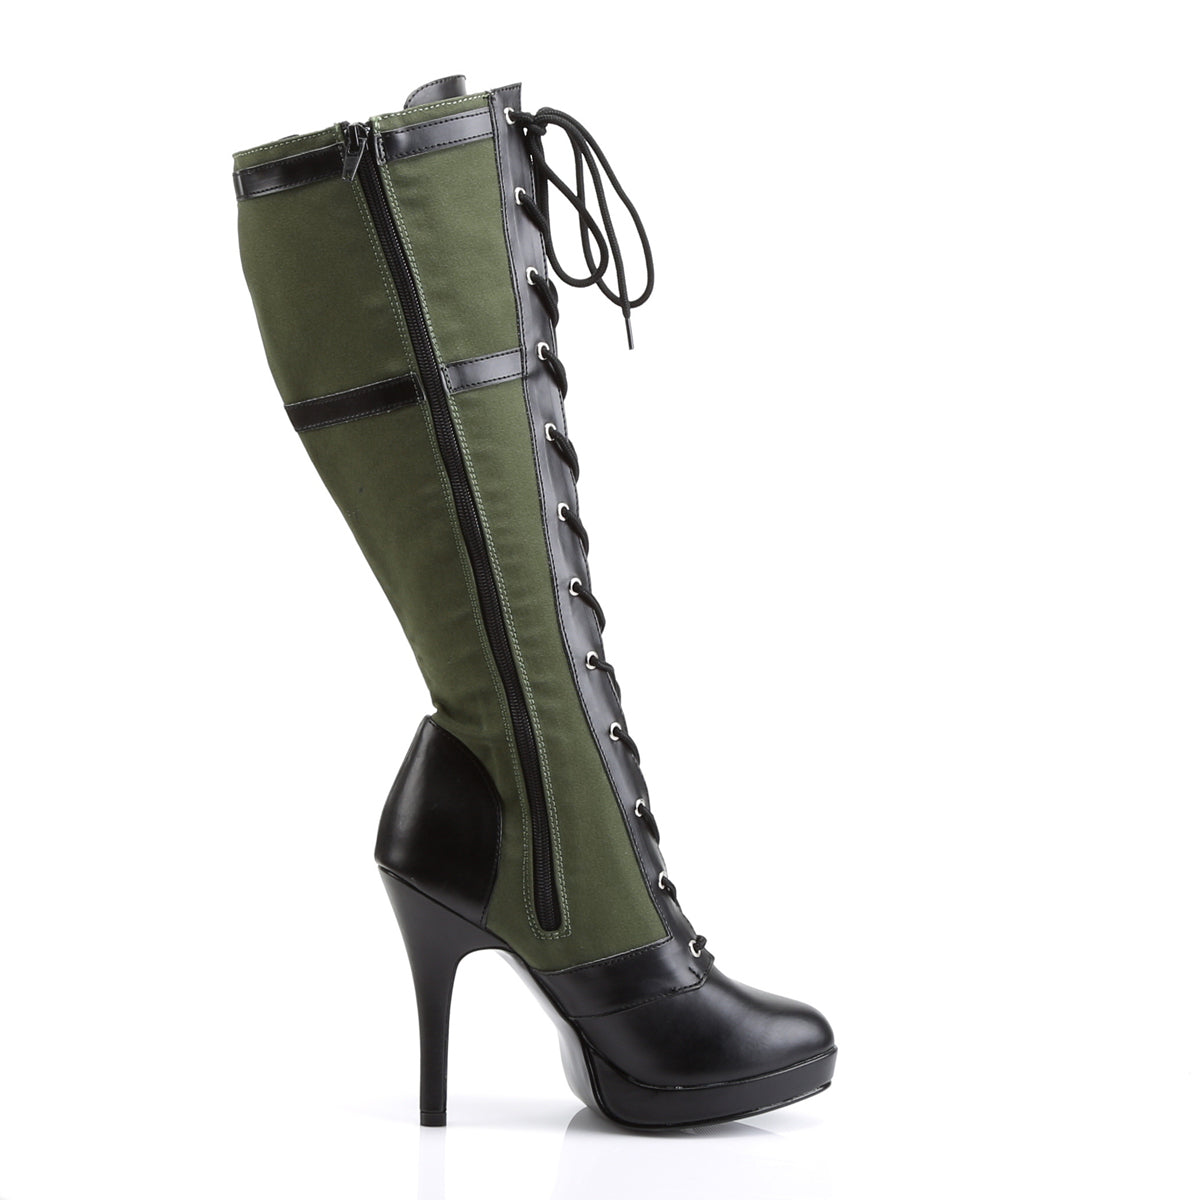 ARENA-2022 4.5" Heel Black Army Green Canvas Women's Boots Funtasma Costume Shoes Fancy Dress